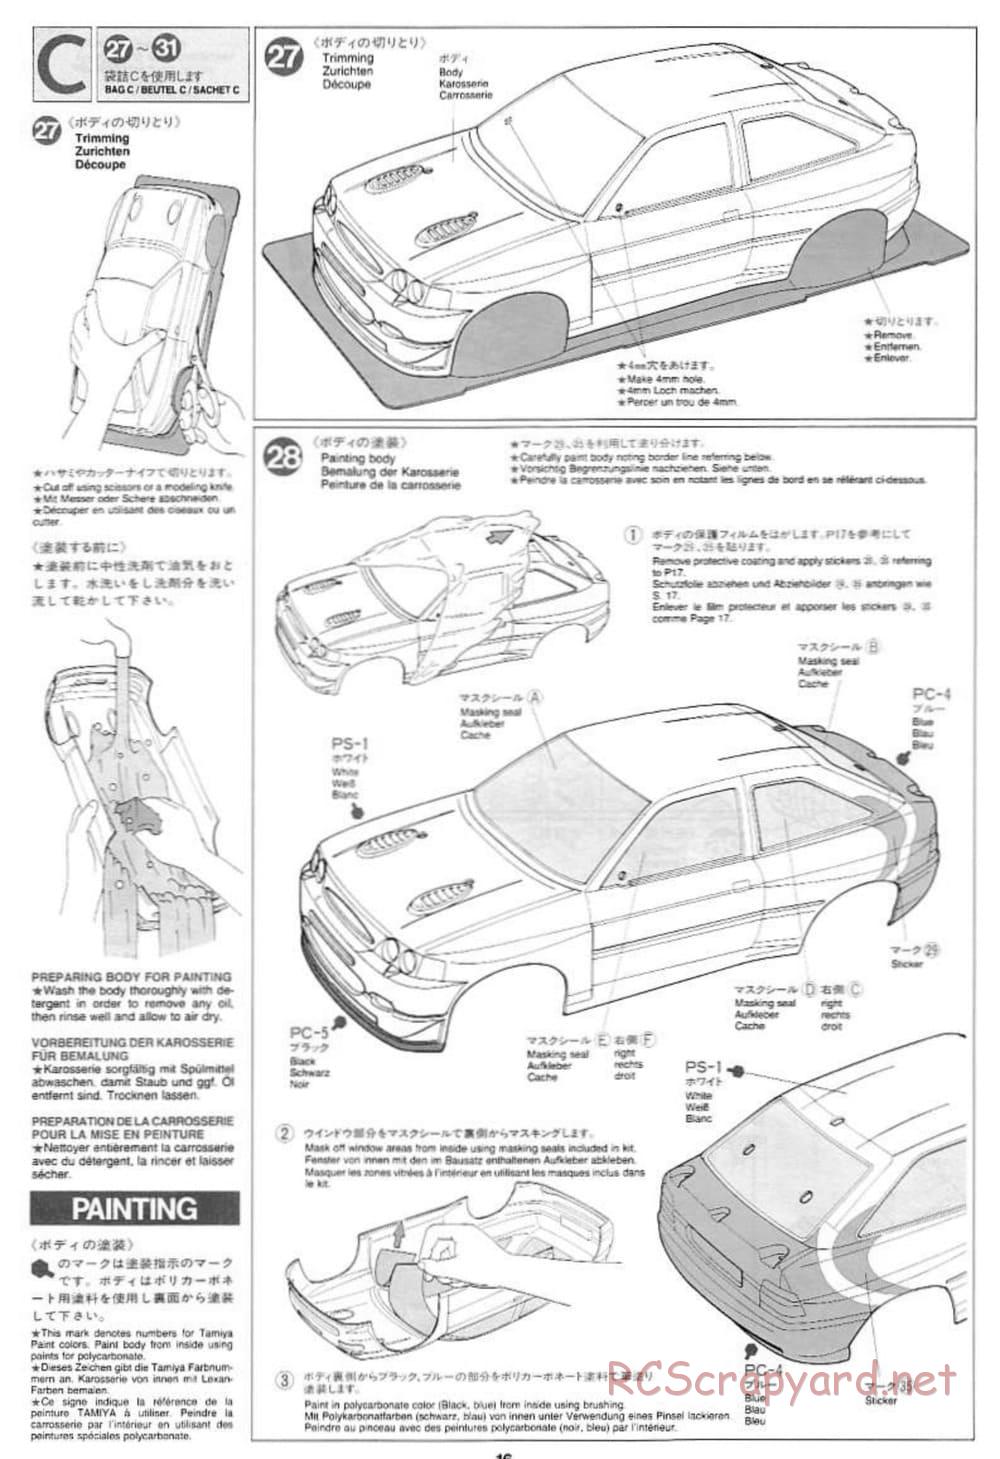 Tamiya - Ford Escort WRC - TL-01 Chassis - Manual - Page 16